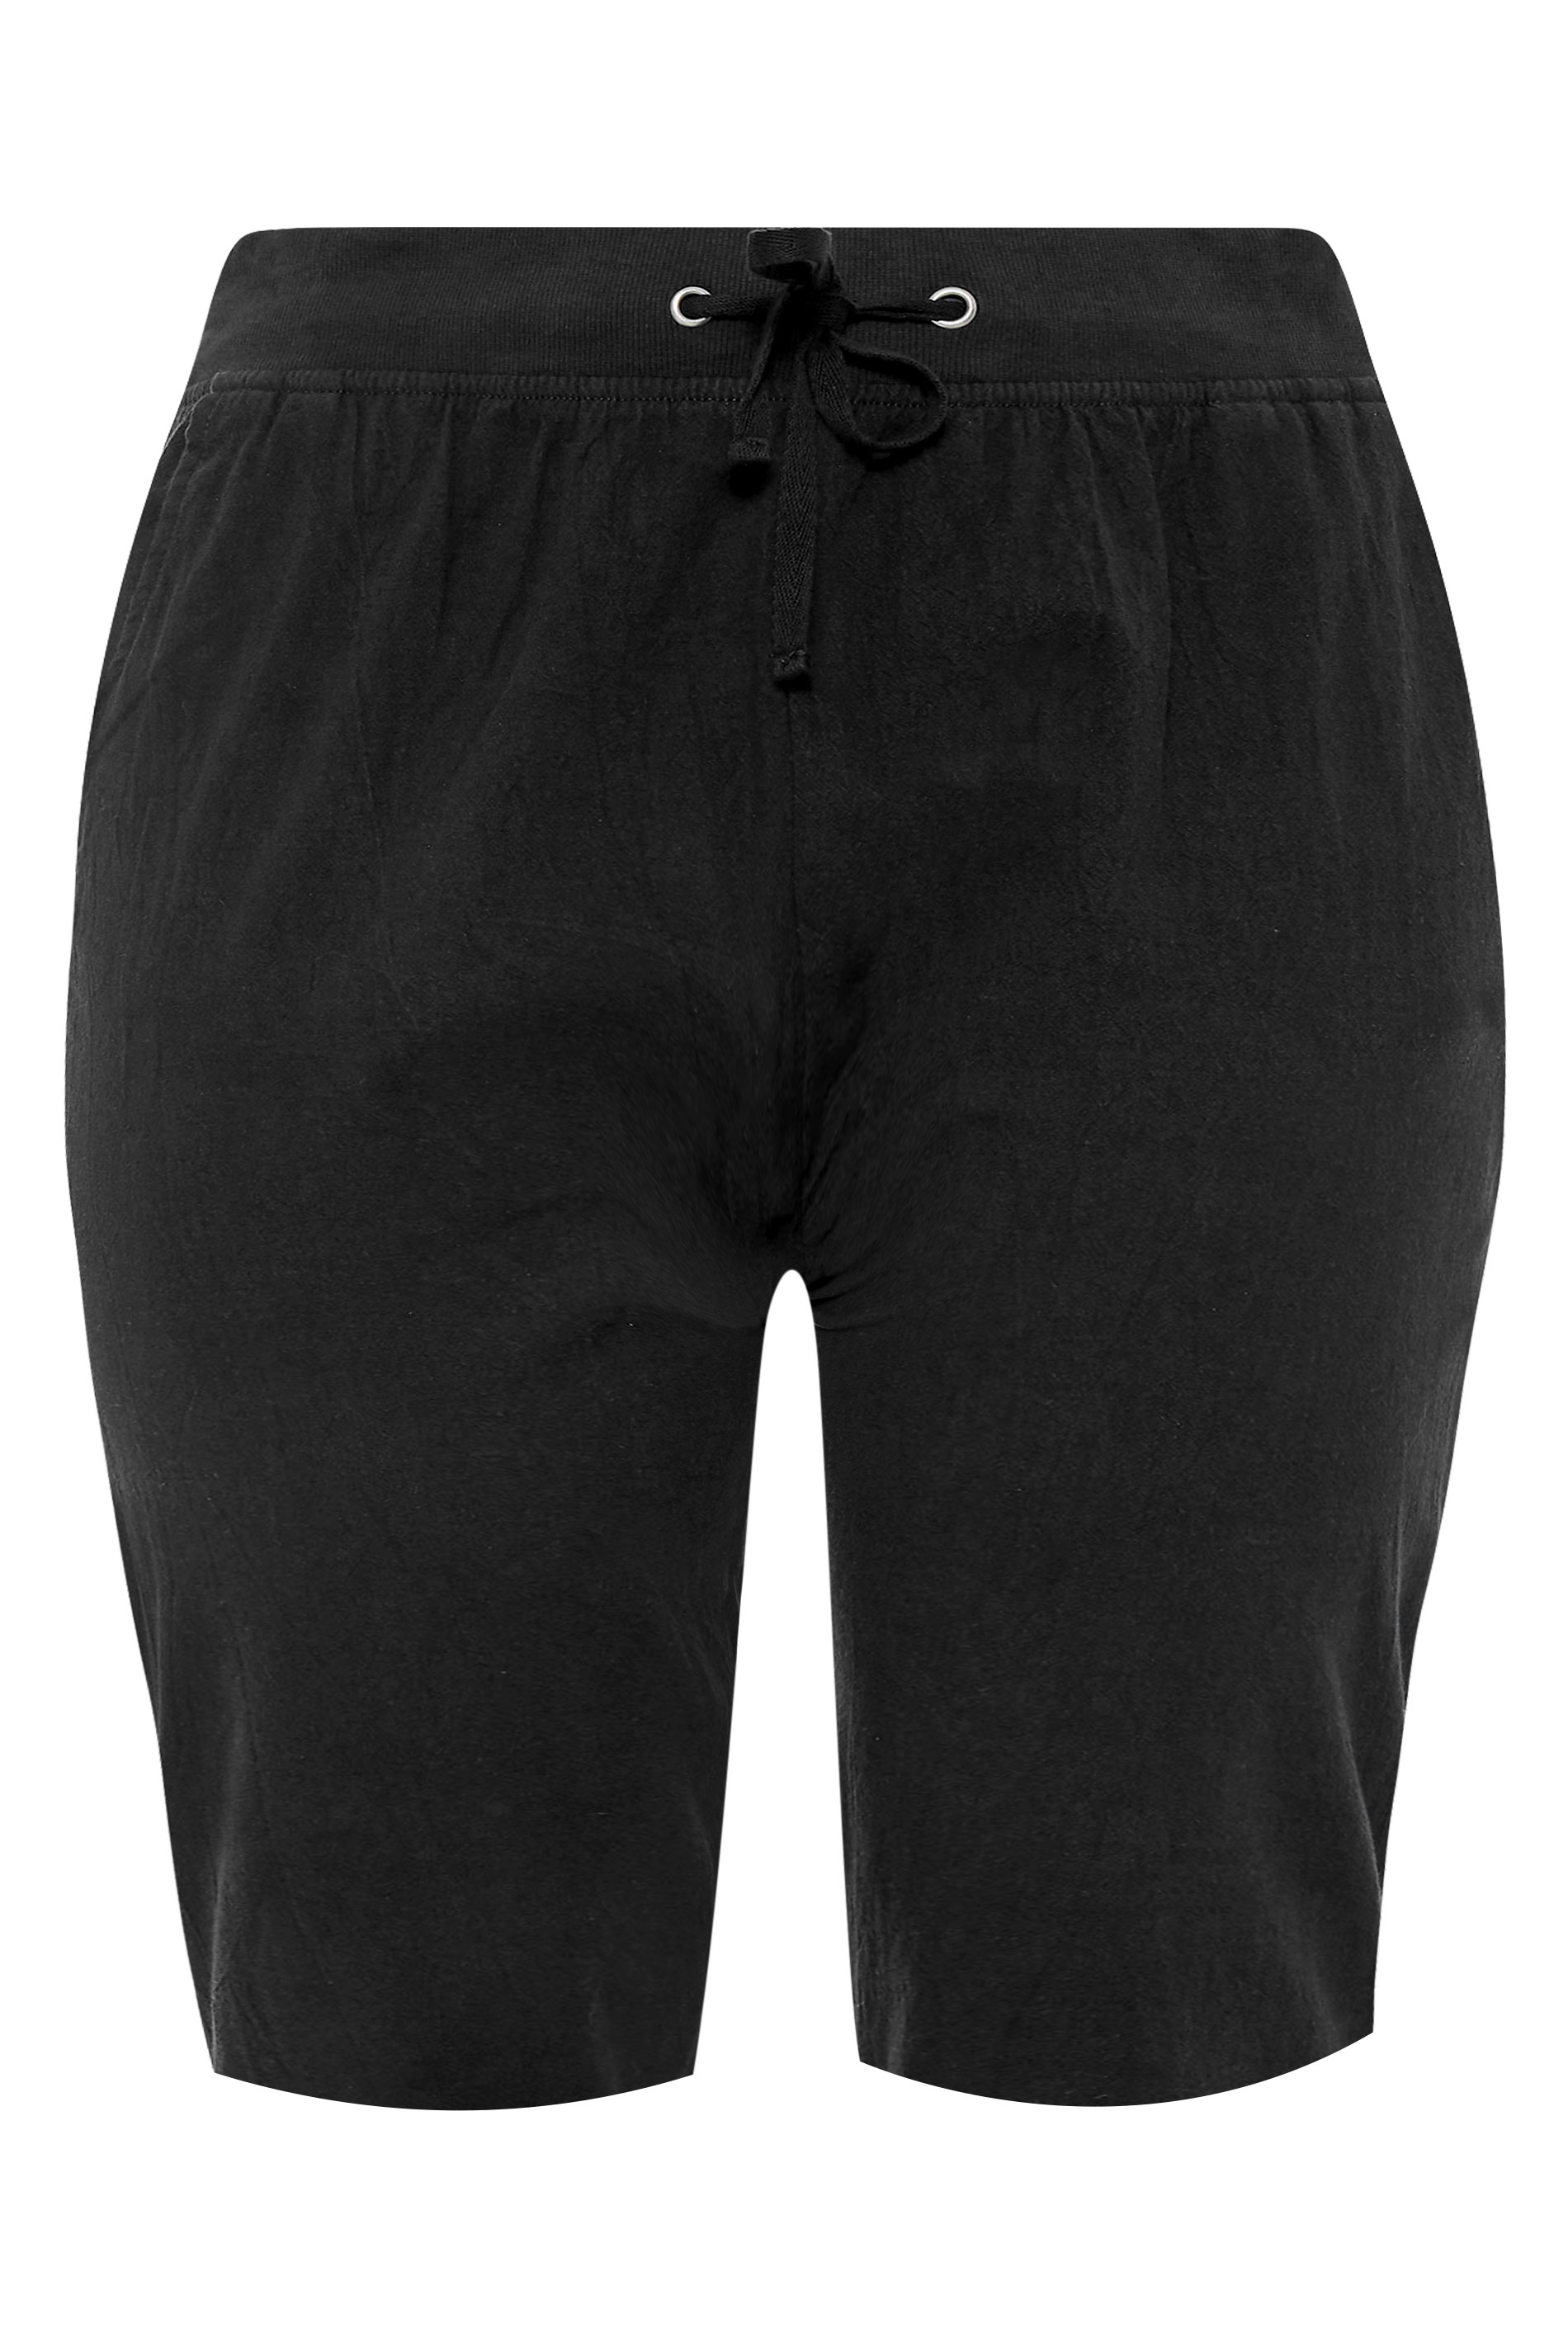 Grande taille  Shorts Grande Taille Grande taille  Shorts en Coton | Short Noir en Coton - UJ50772